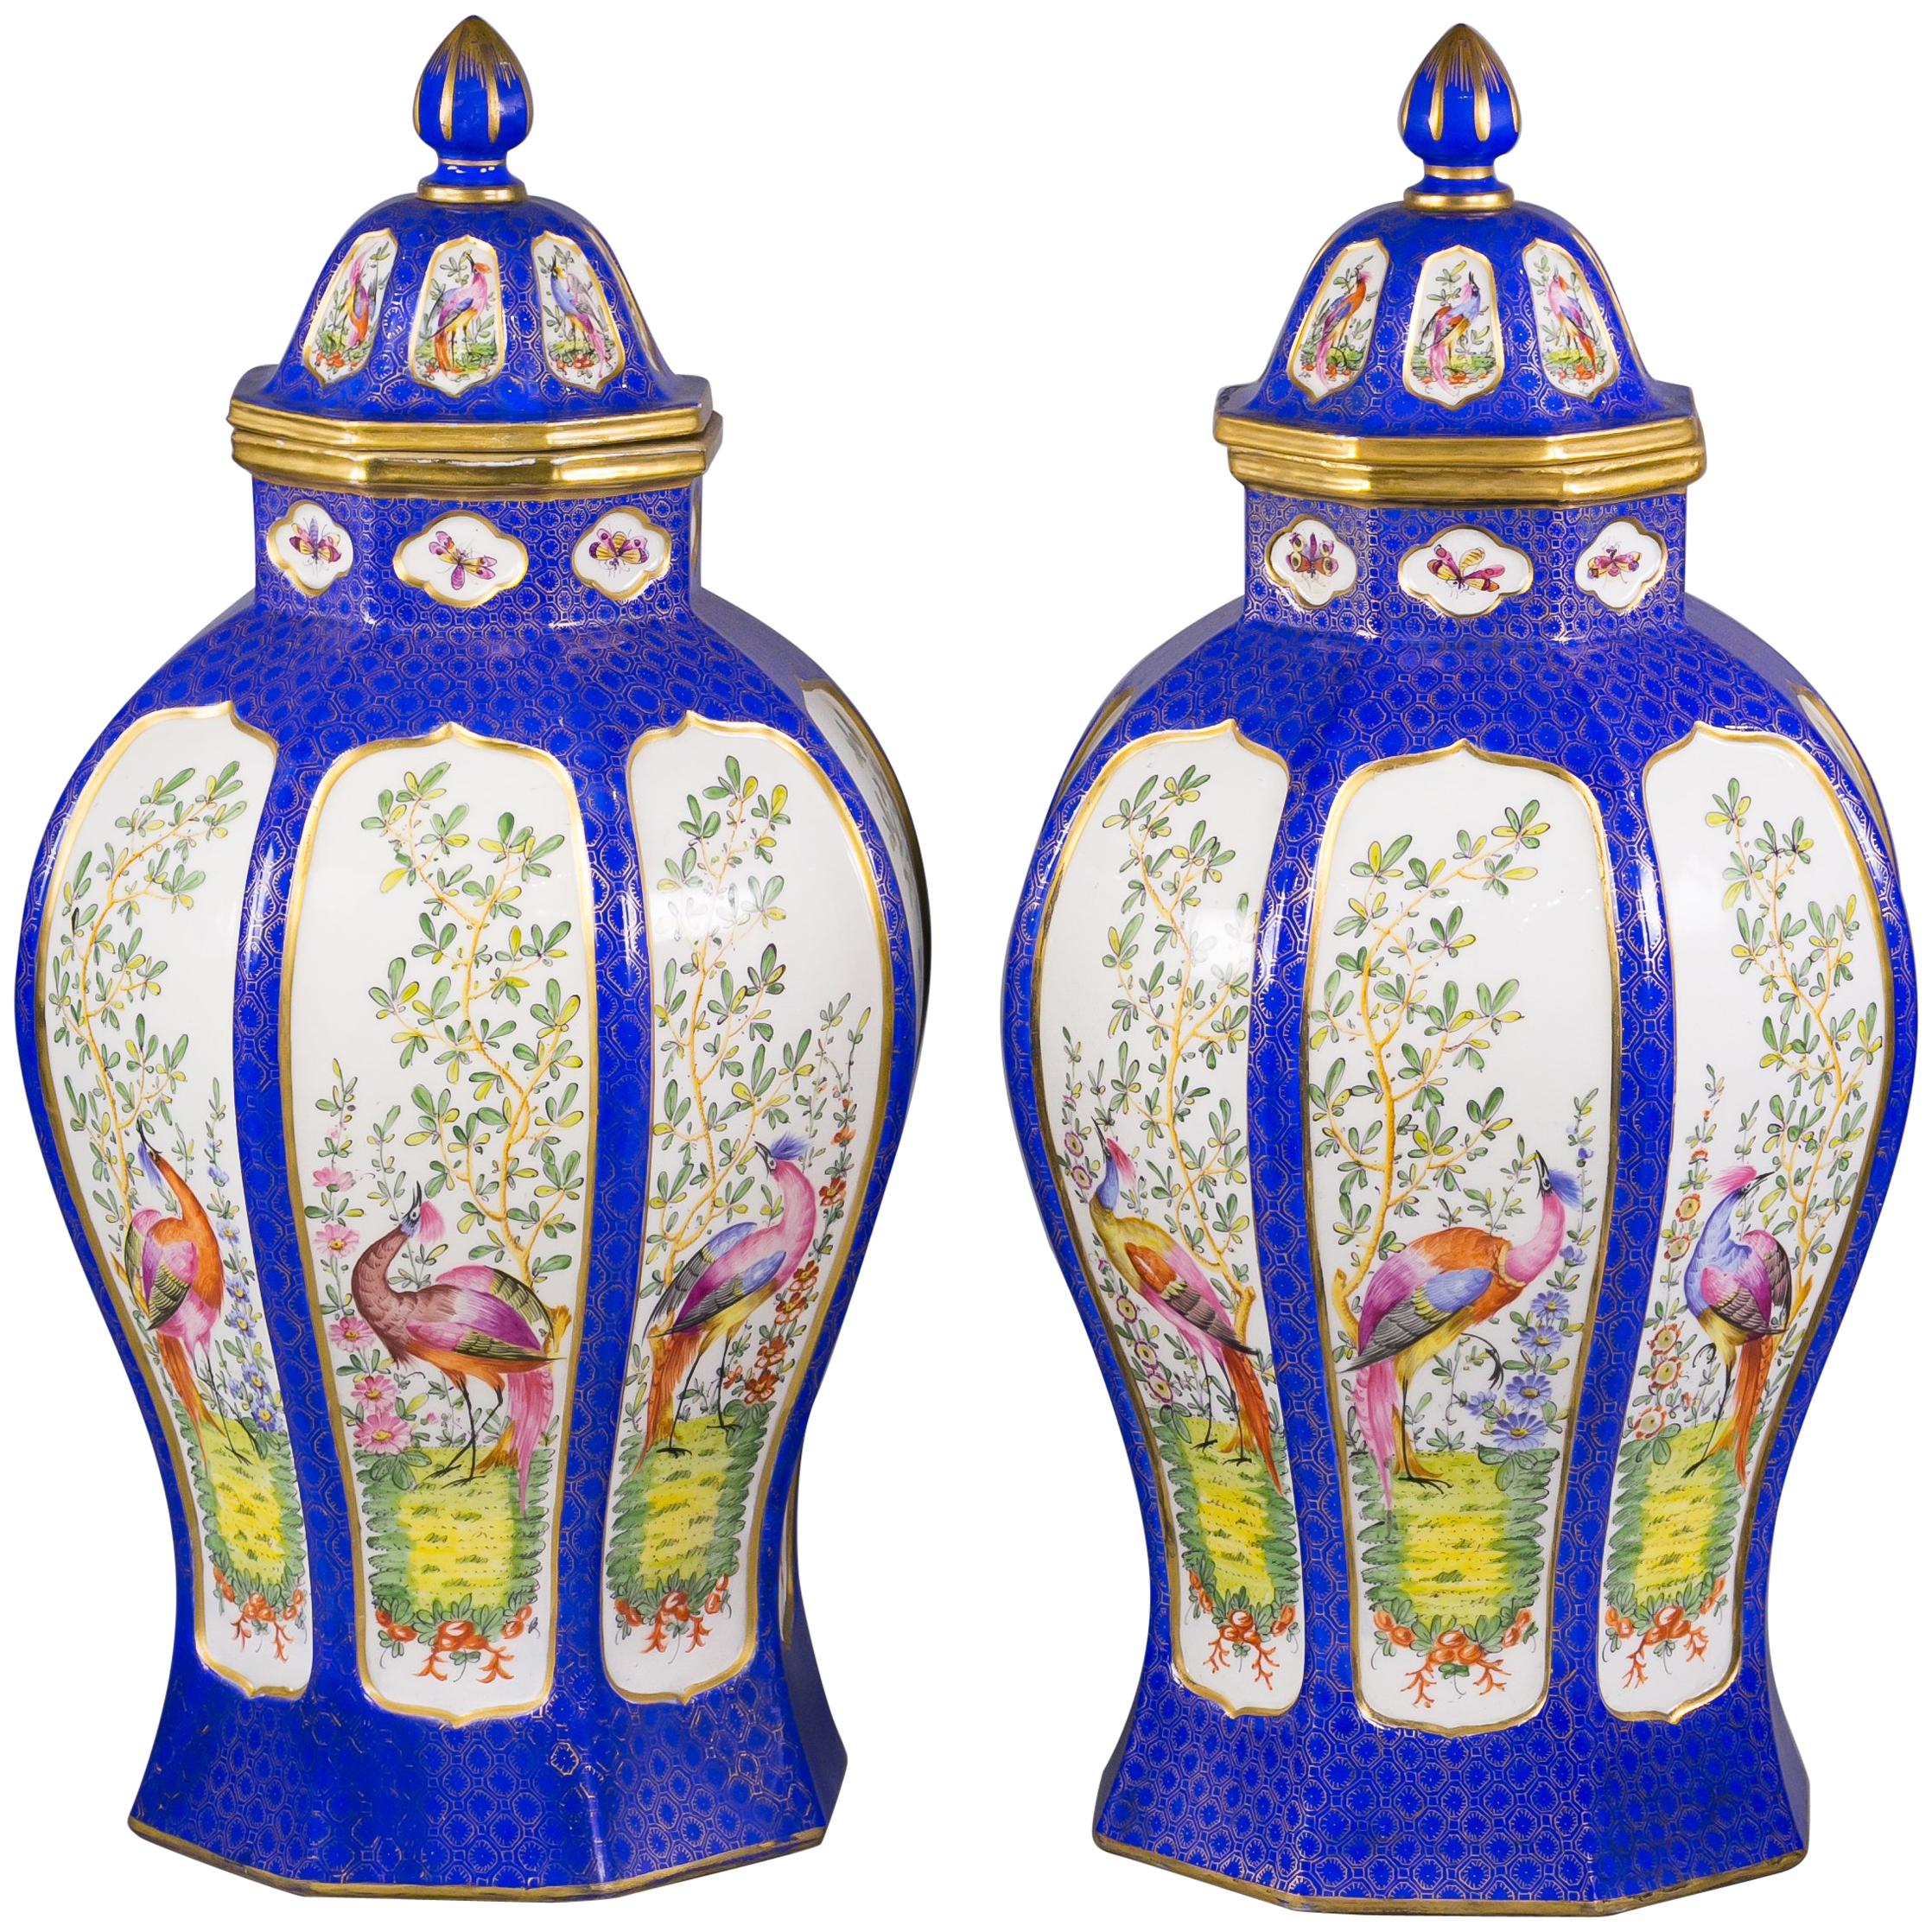 Pair of French Porcelain Covered Jars, Samson, circa 1880